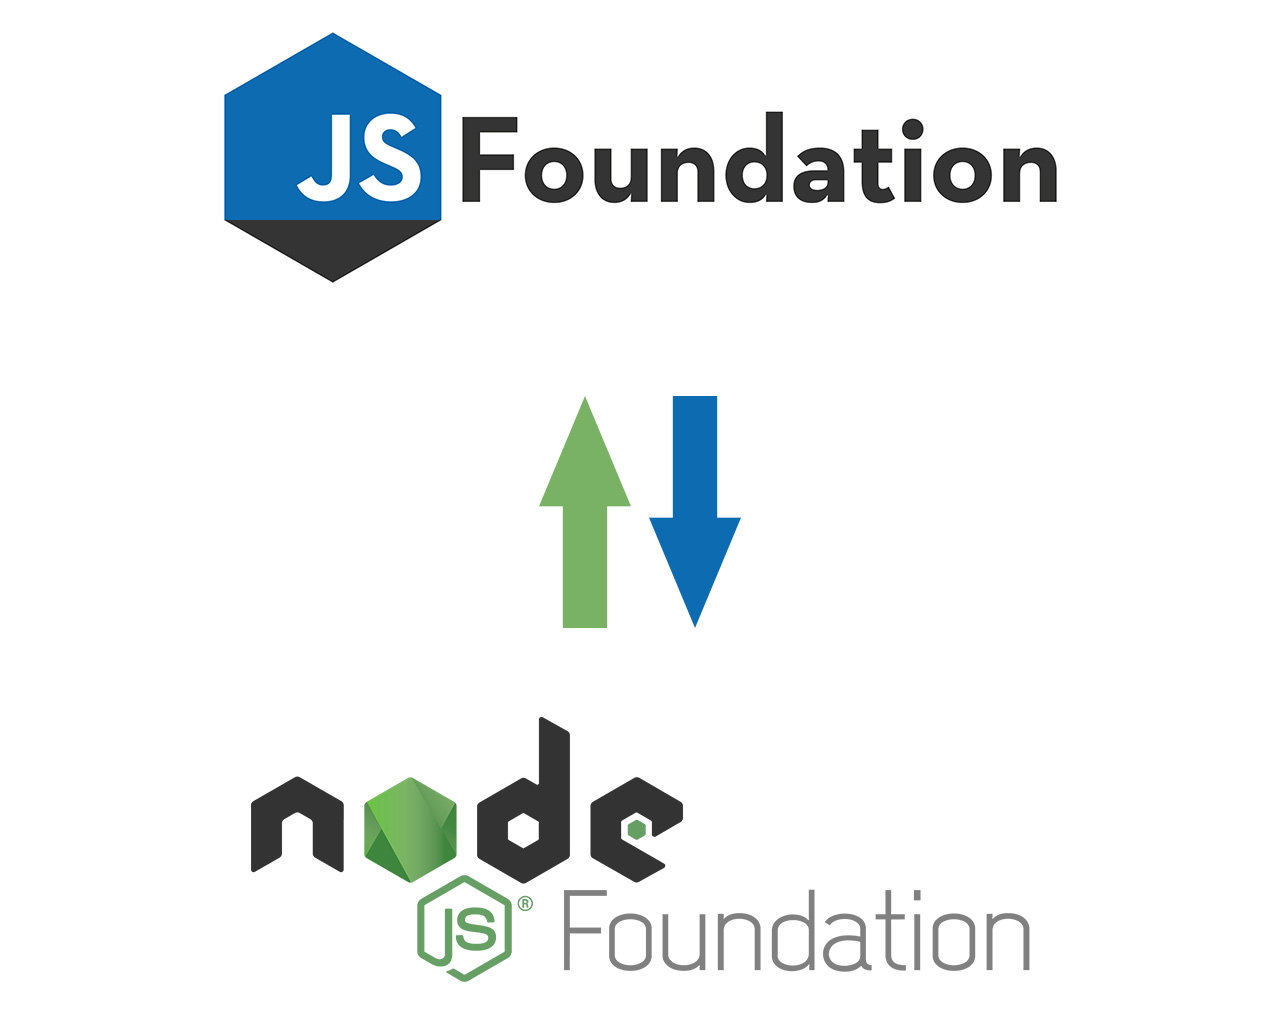 Node.js and JS Foundation